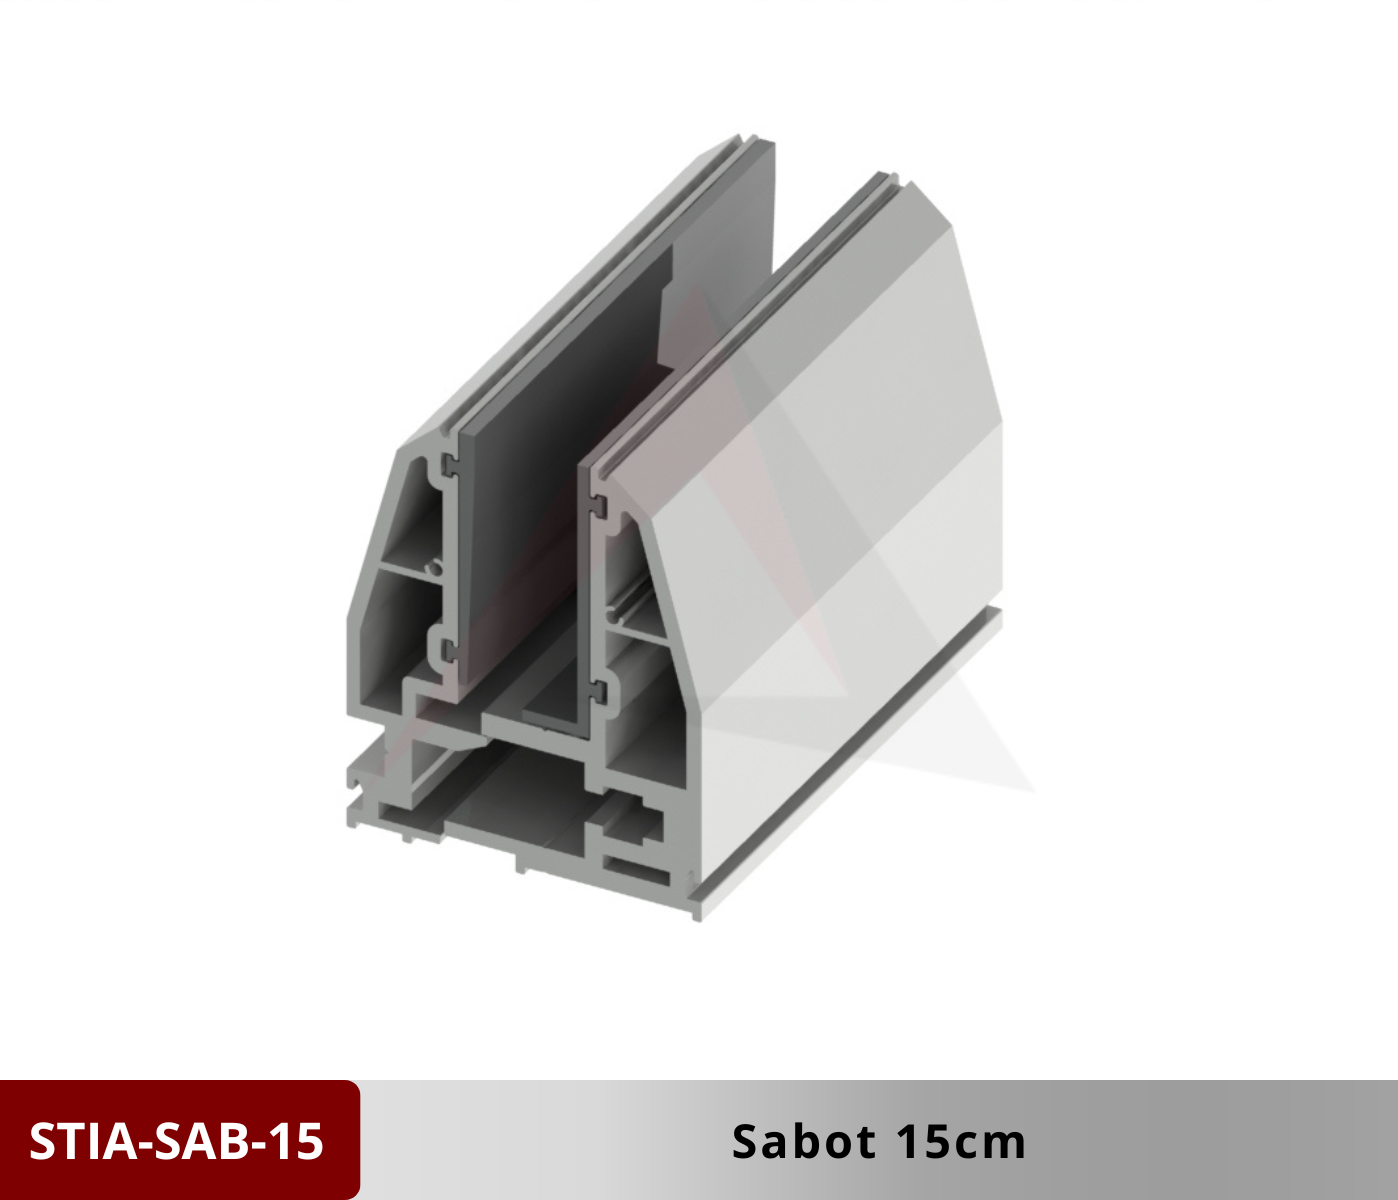 STIA-SAB-15